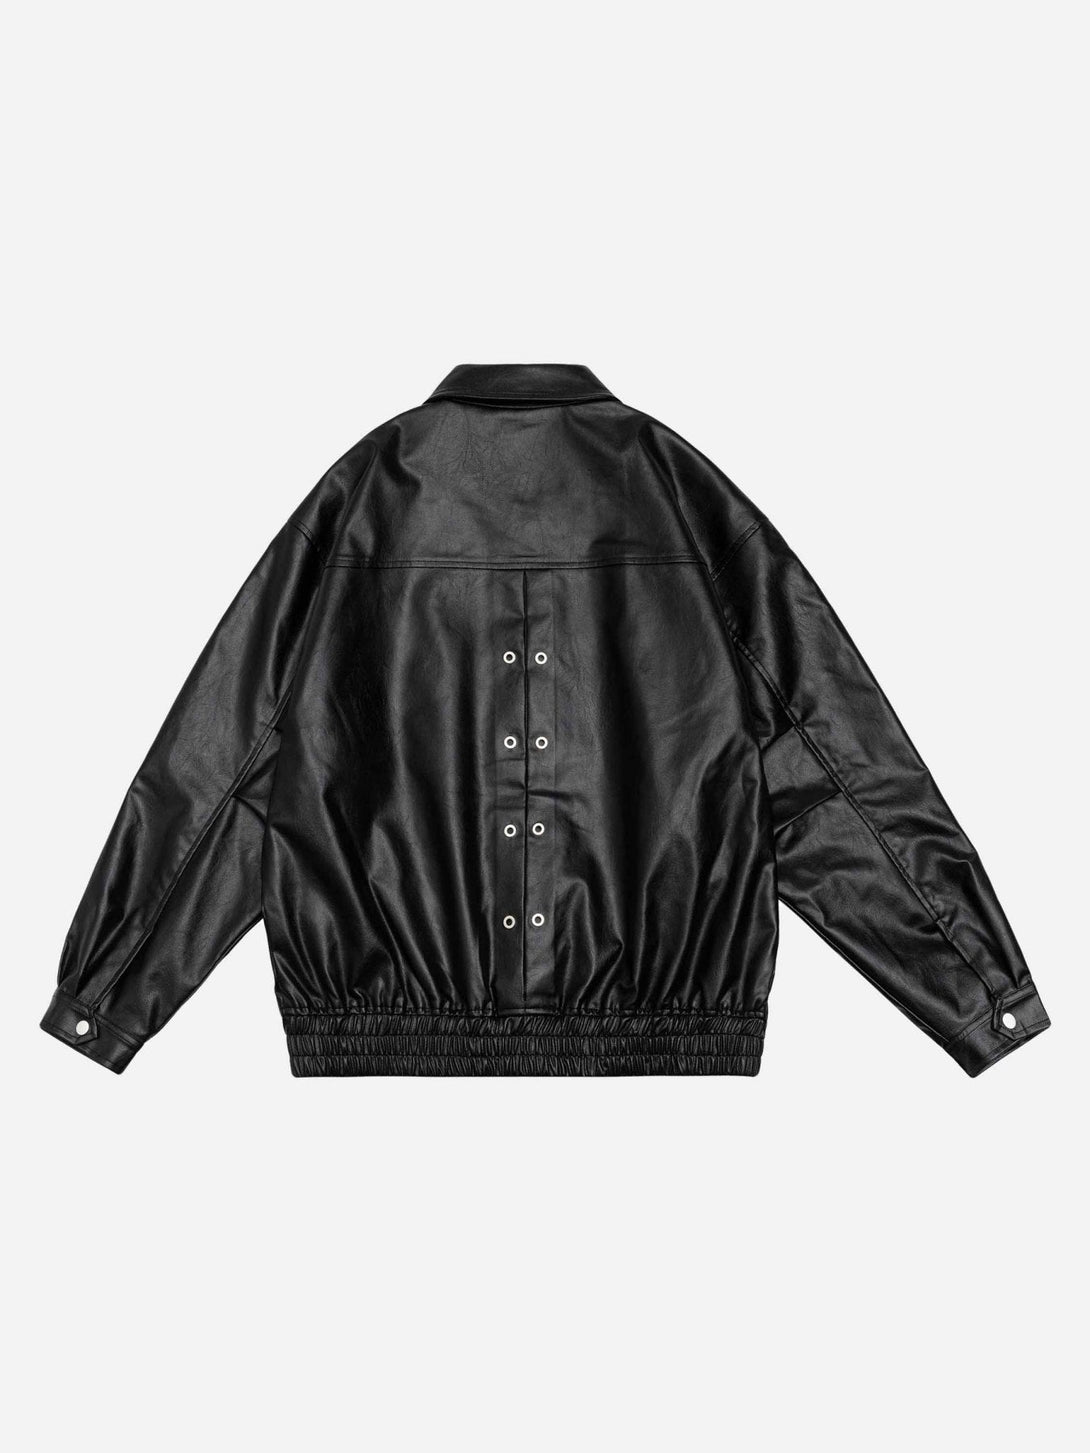 Majesda® - Loose Embroidered Leather Jacket - 1949- Outfit Ideas - Streetwear Fashion - majesda.com